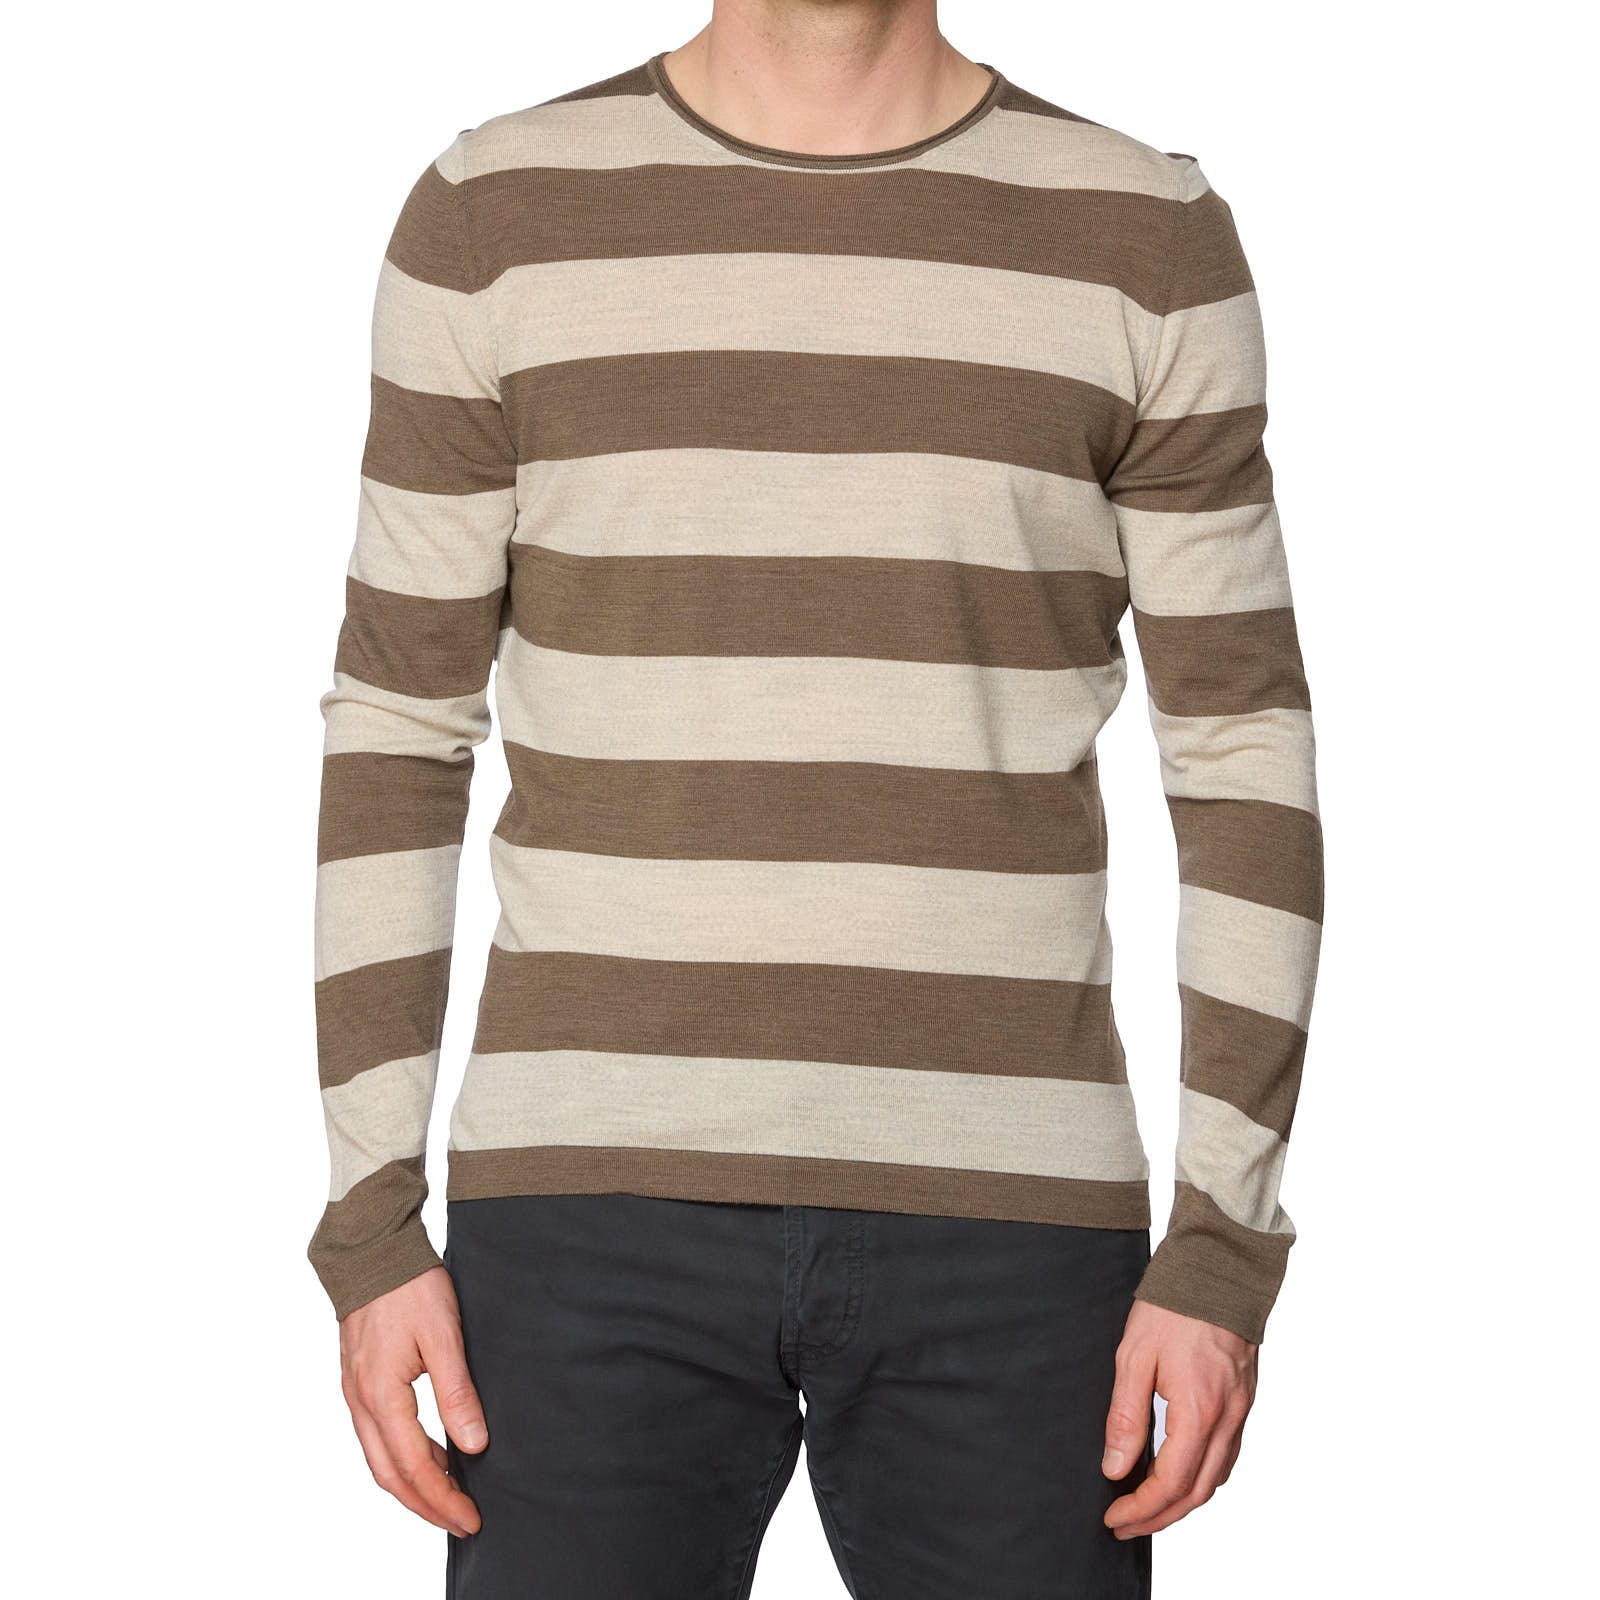 ONES Brown-Gray Striped Wool Super 150's Knit Crewneck Sweater EU 50 NEW US M